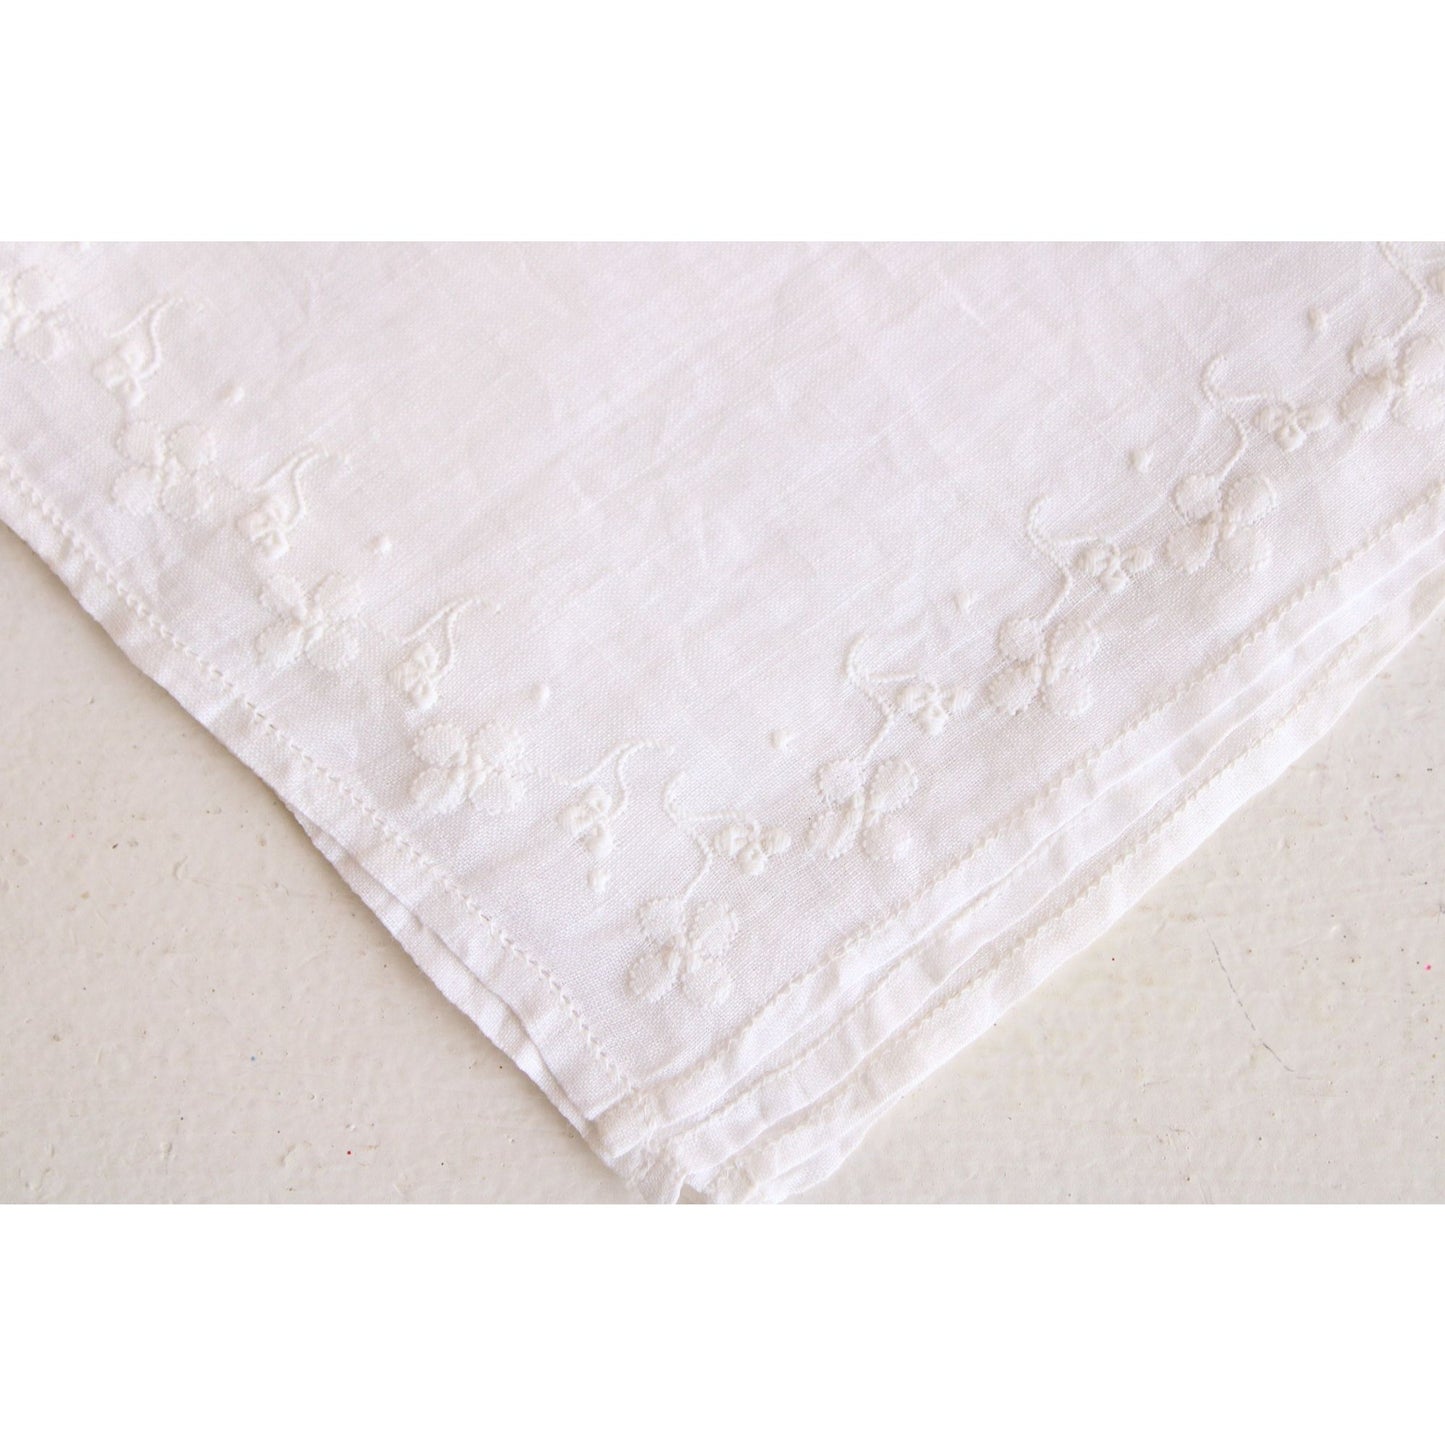 Vintage 1940s 1950s White Embroidered Linen Handkerchief